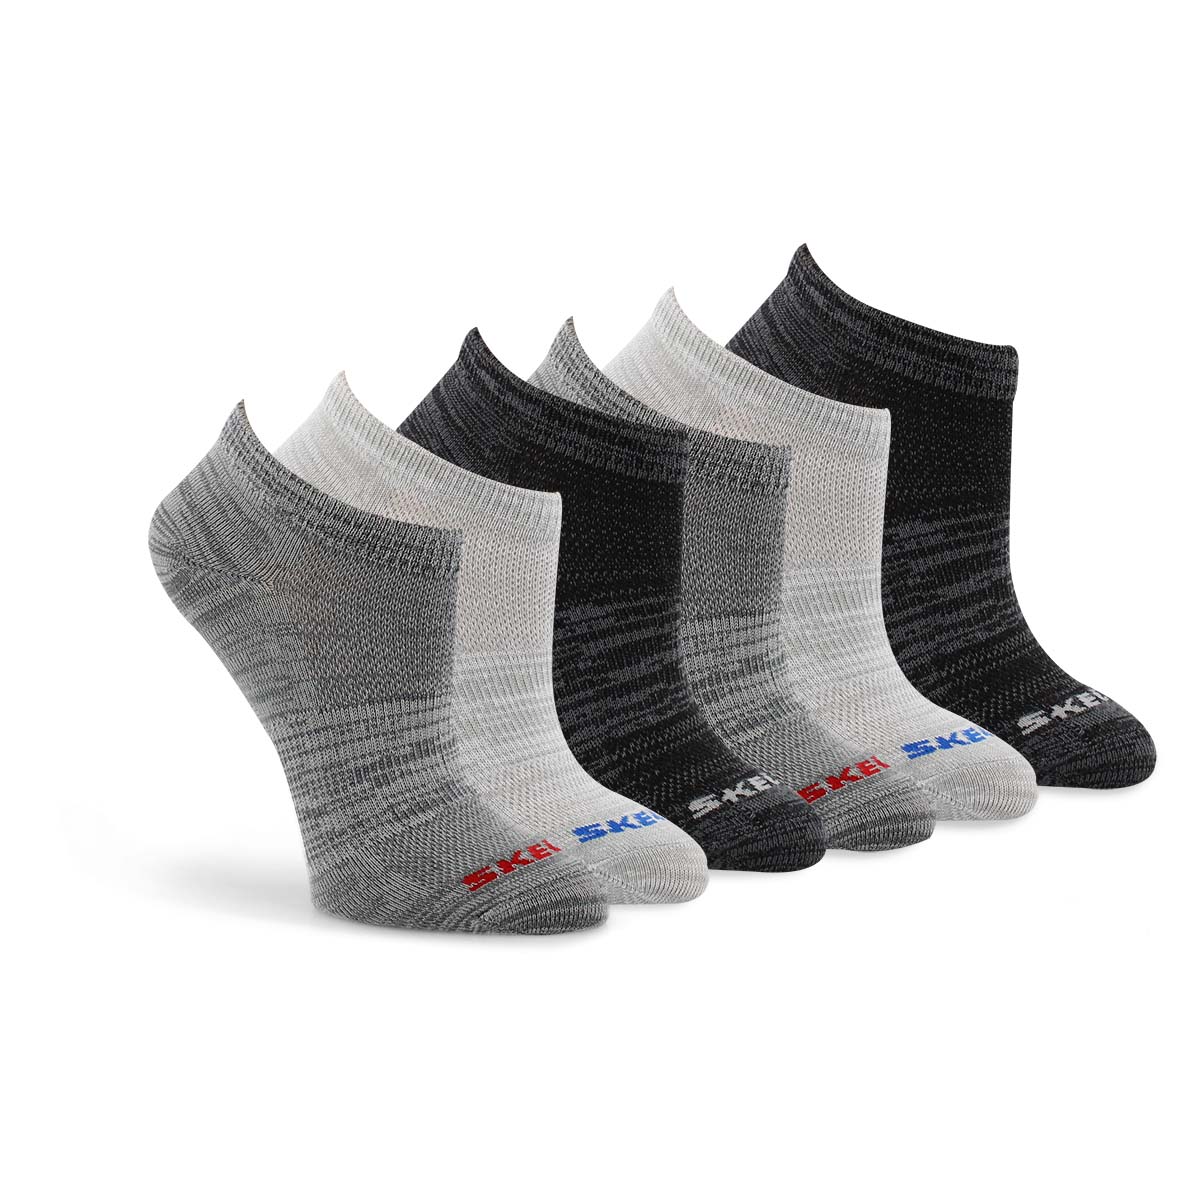 Skechers Boys' NON TERRY LOW CUT socks - 6 p | SoftMoc.com